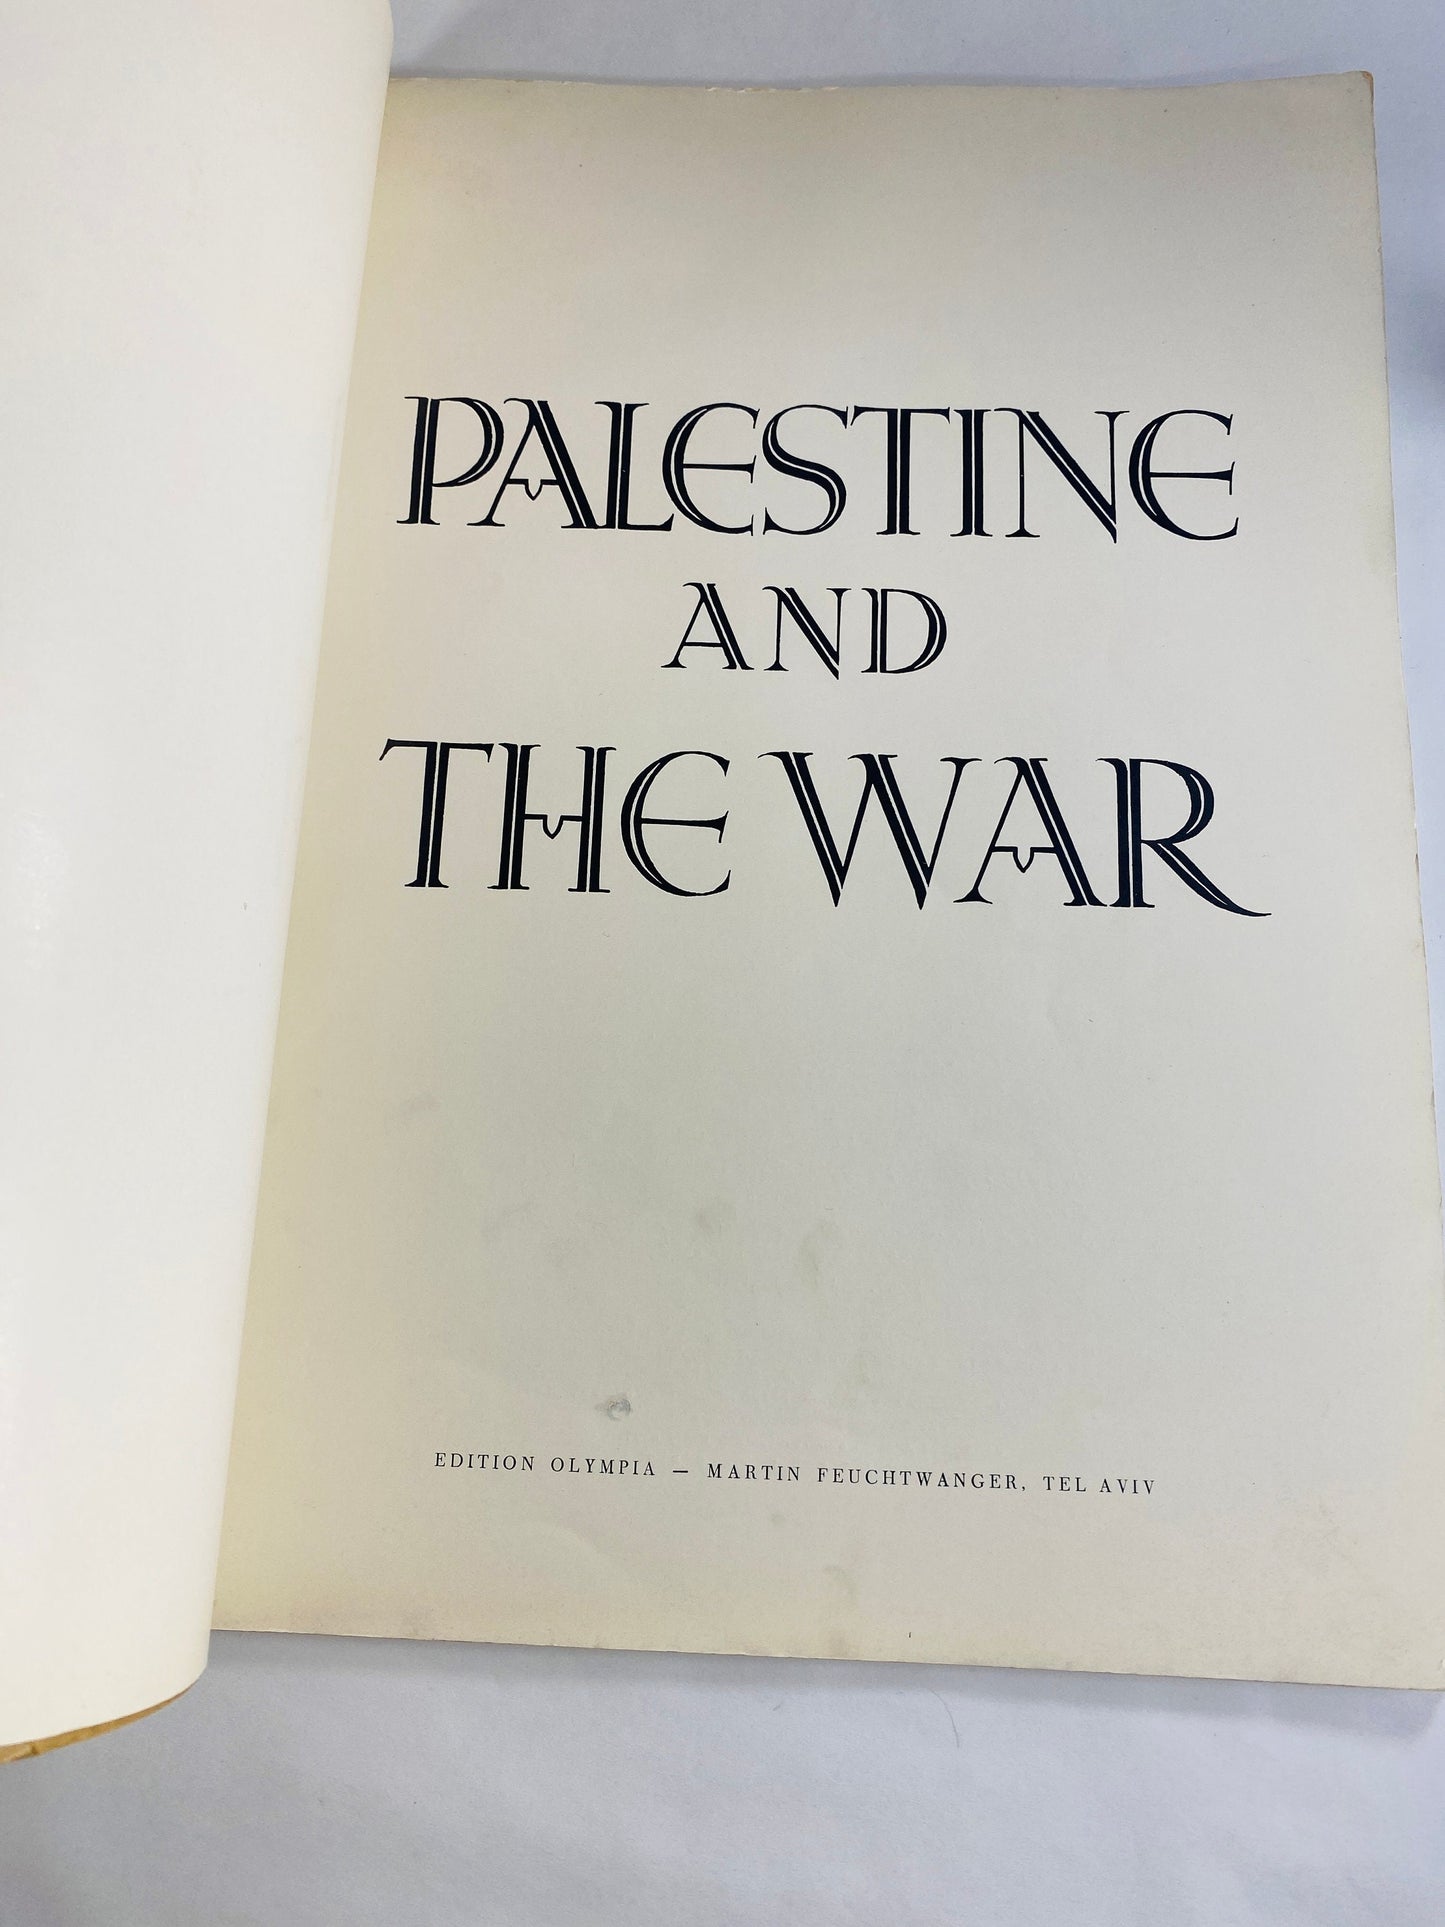 1941 Vintage Palestine and the War SCARCE British Axis powers propaganda Olympia edition Martin Feuchtwanger Tel Aviv Israel